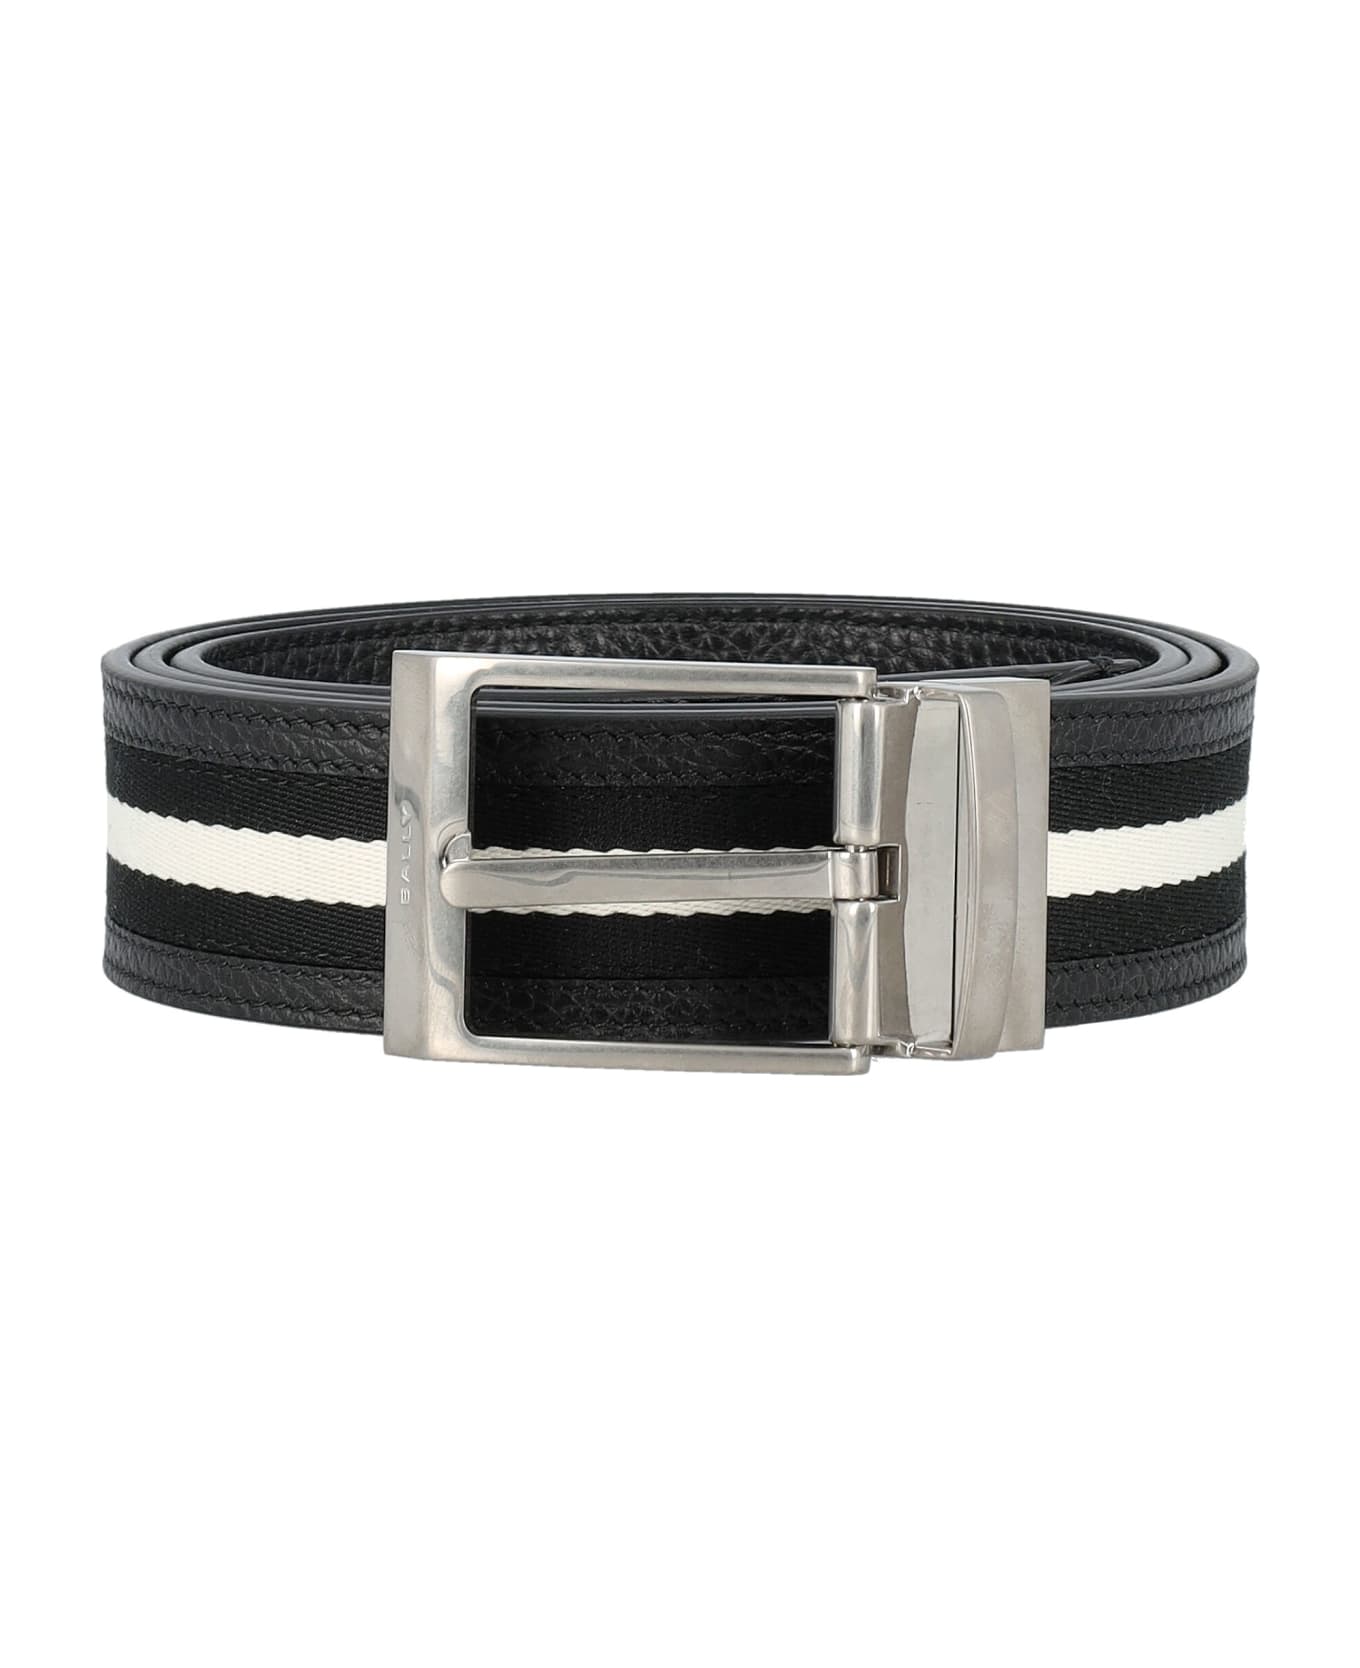 Bally Shiffie 35 Belt - BLACK+BLK/BONE+PALL